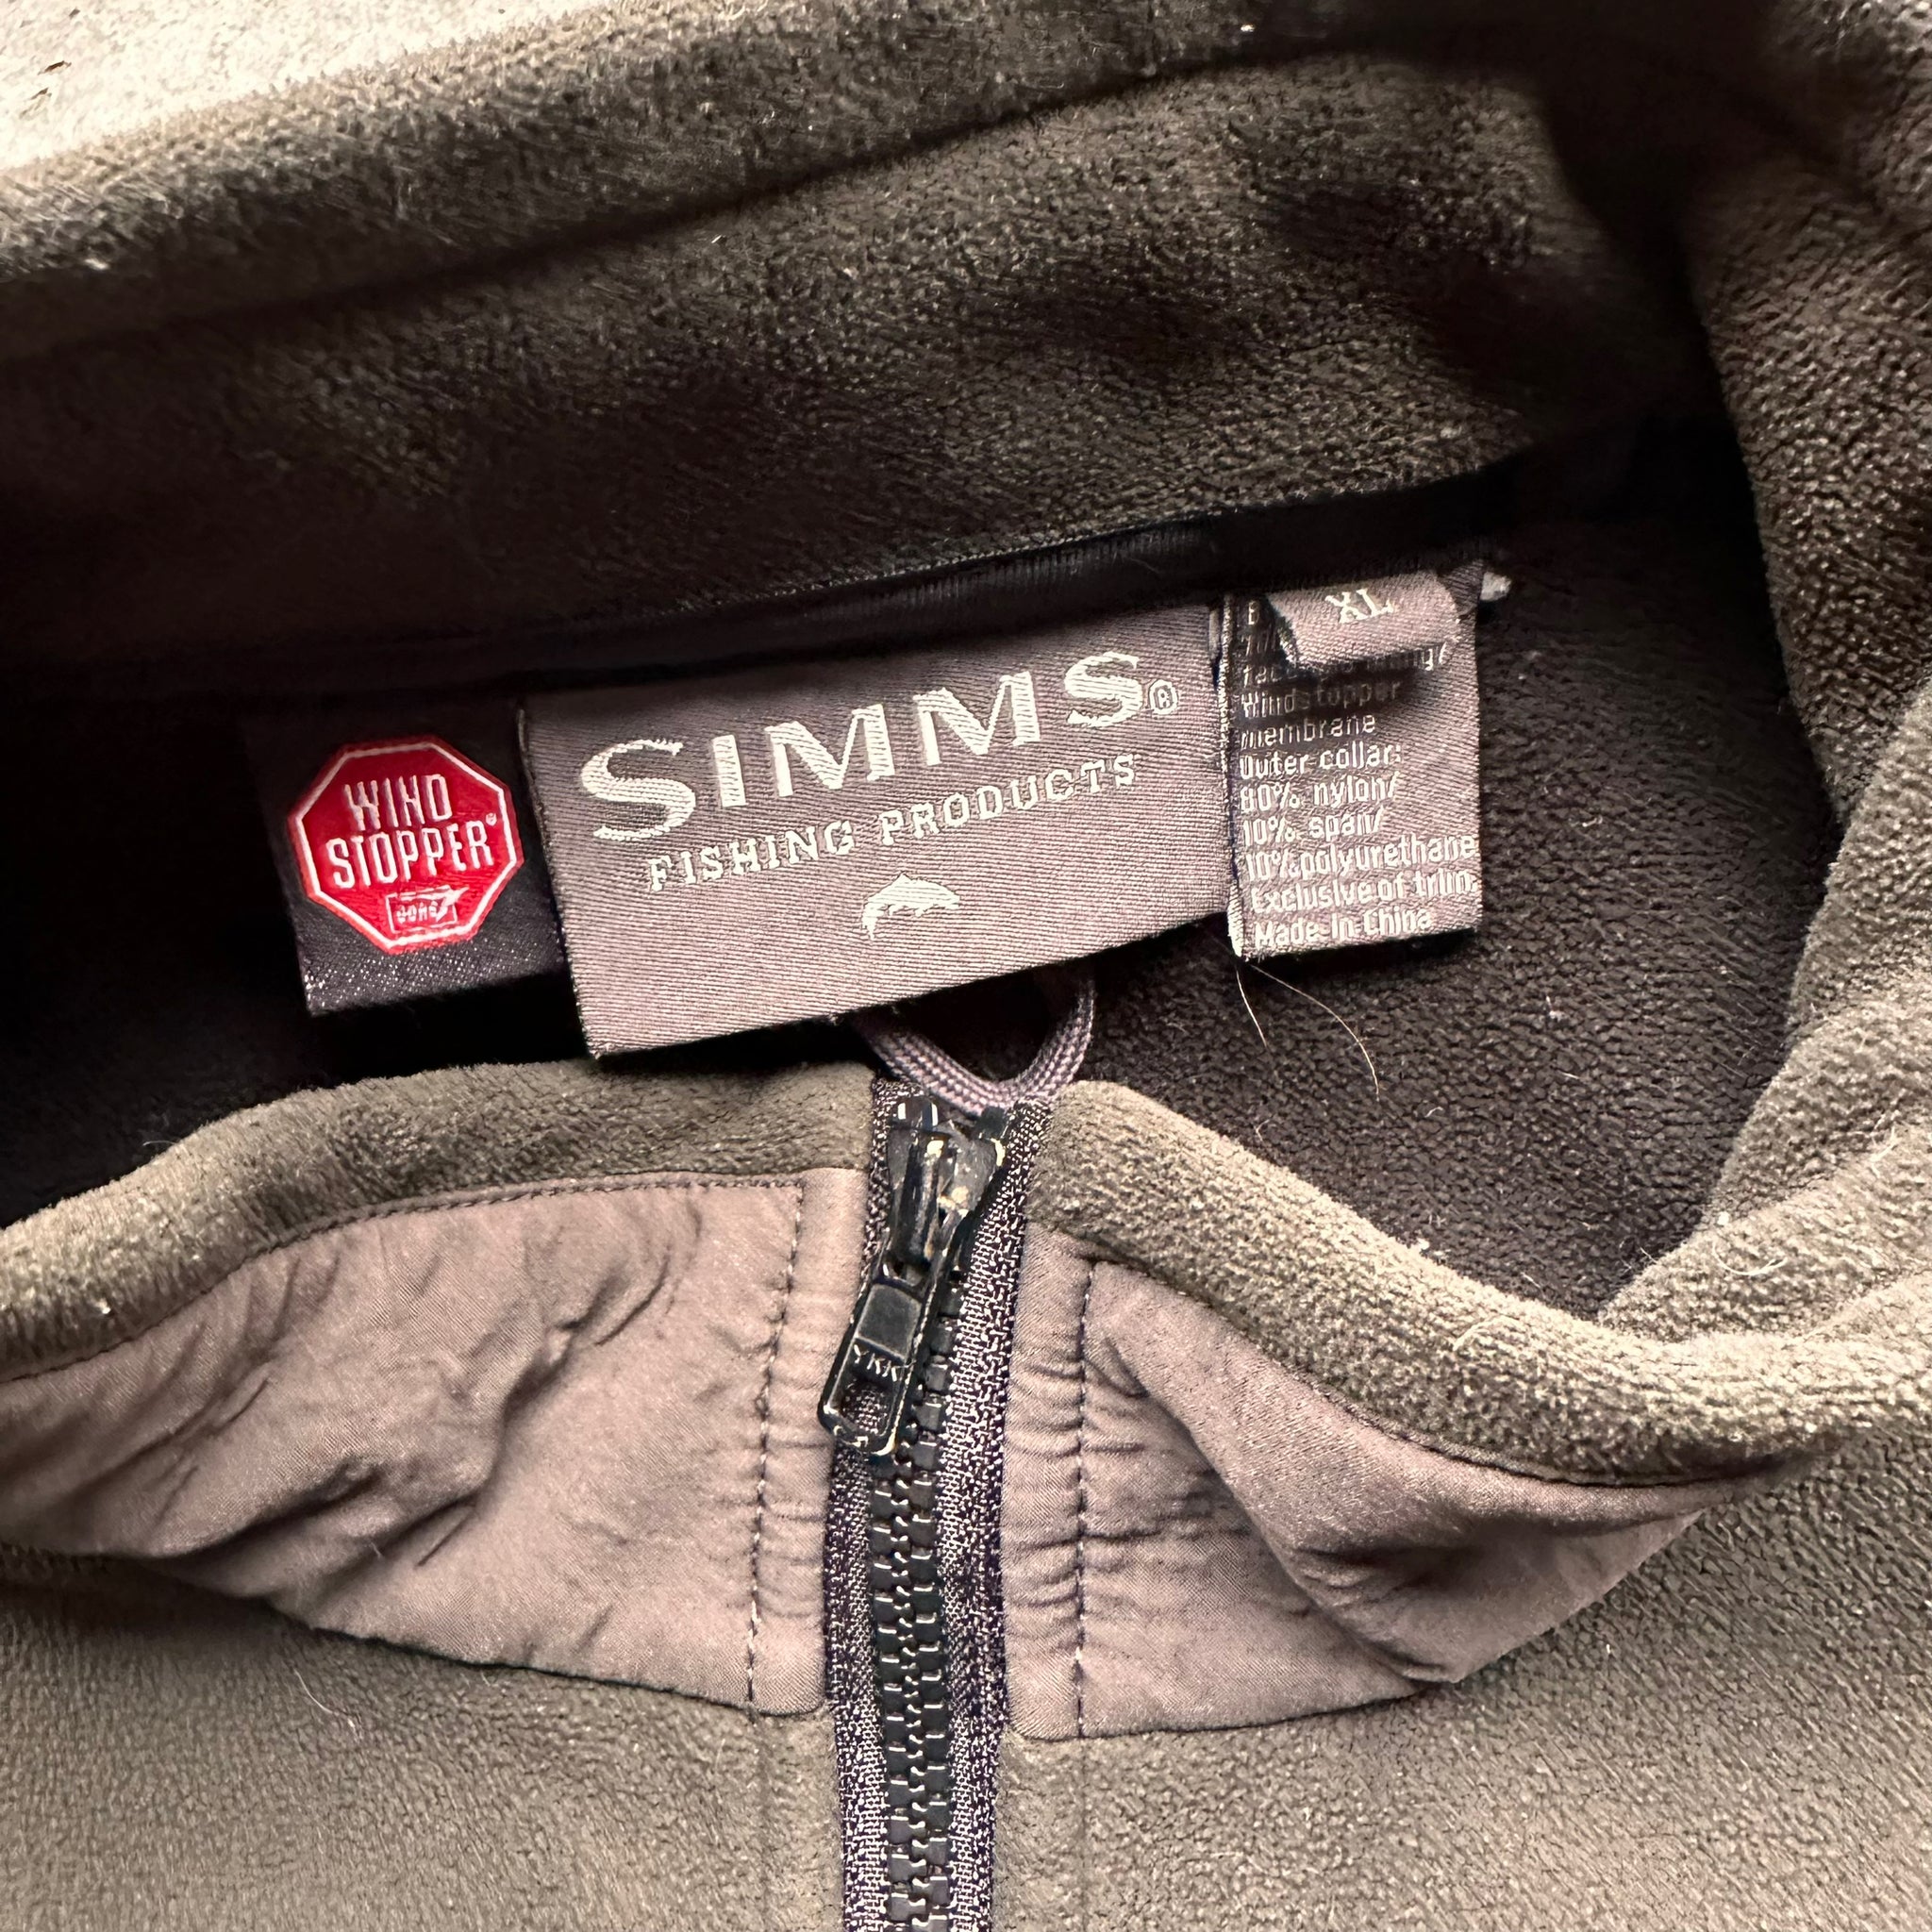 Simms fishing fleece Xzl – Vintage Sponsor